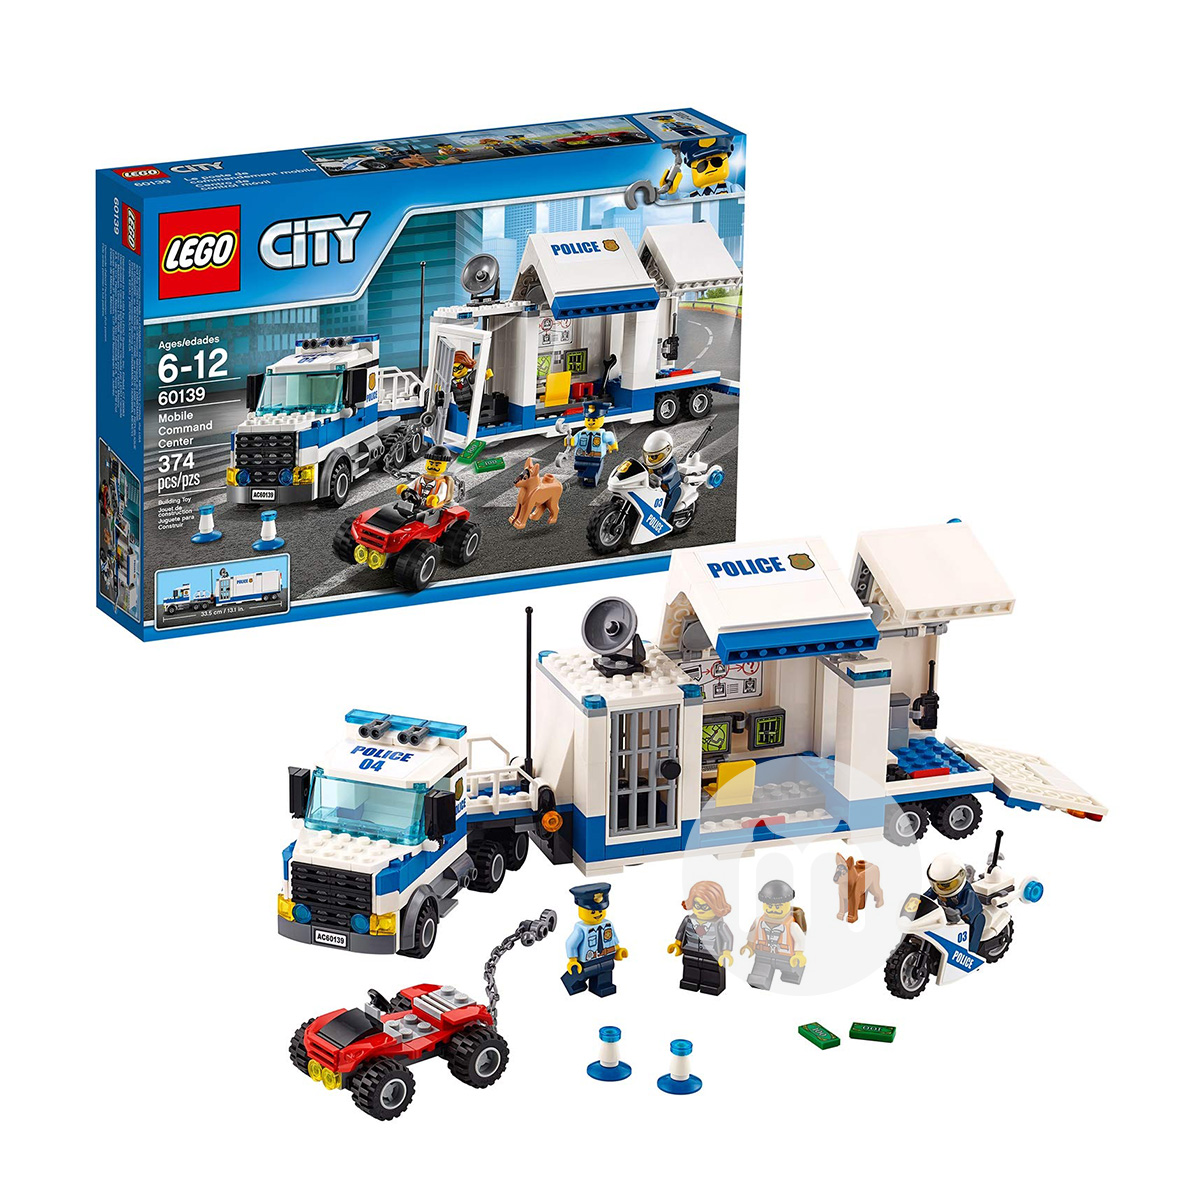 LEGO 丹麥樂高城市系列移動指揮中心60139 海外本土原版